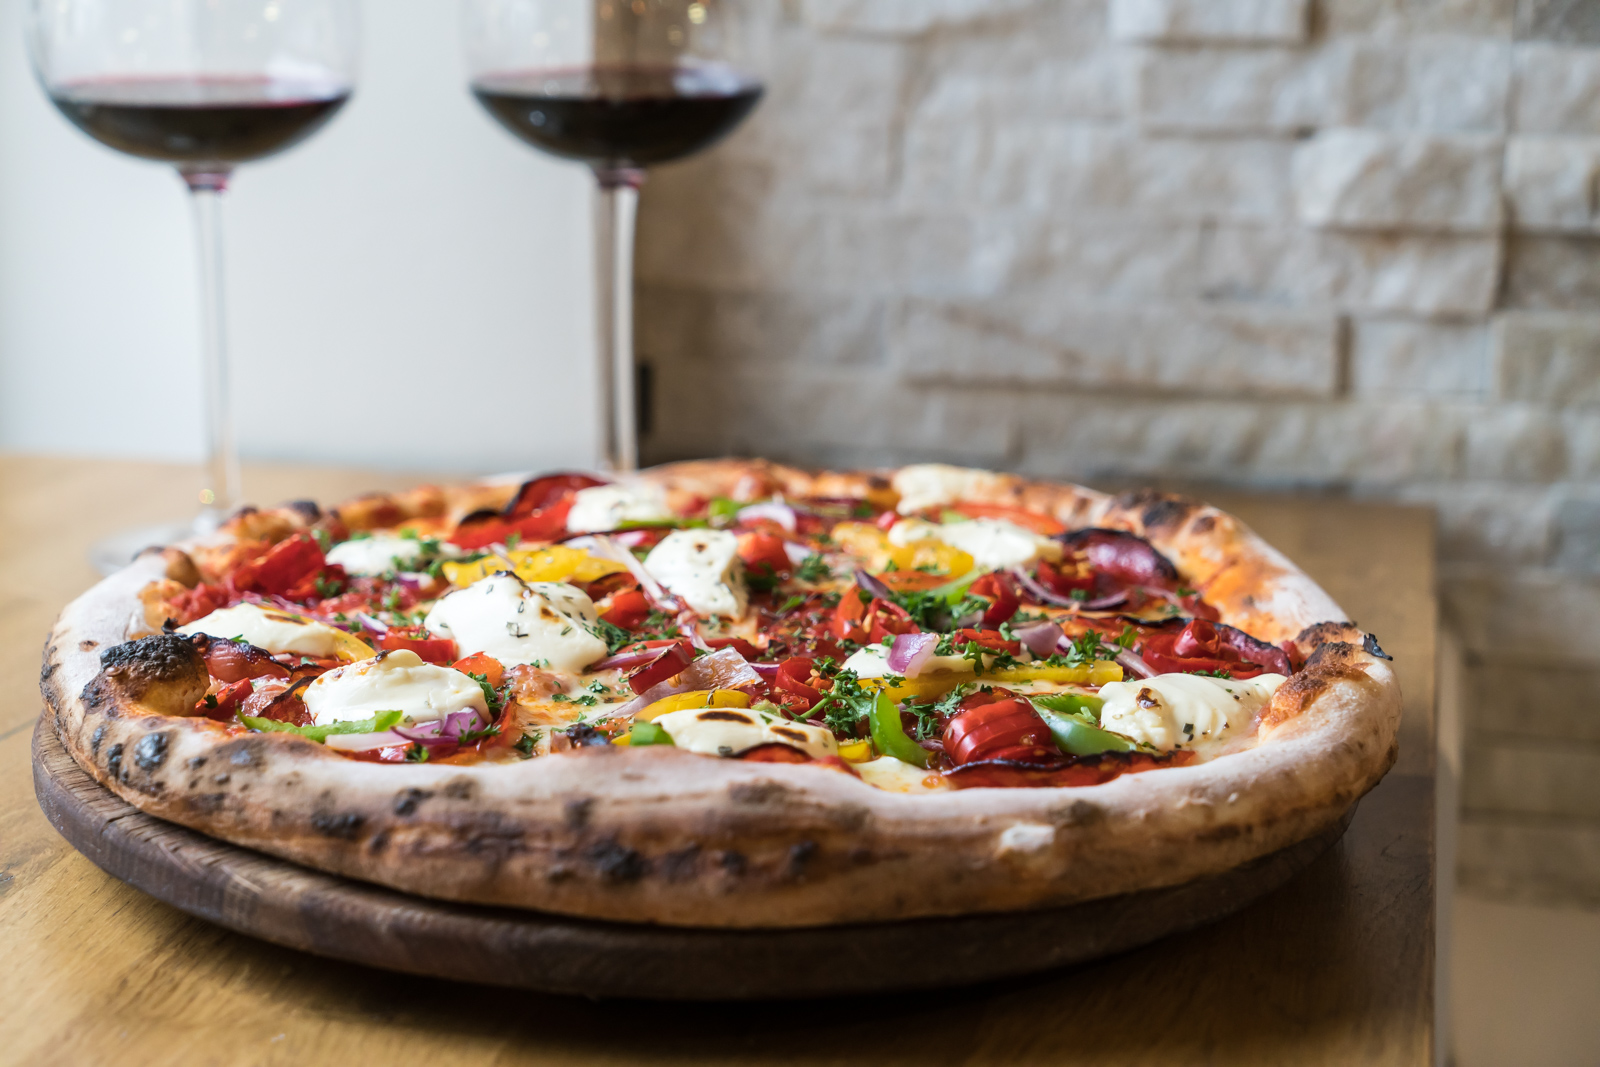 A pizza alongside two glasses of wine at Trattoria Ill Forno.